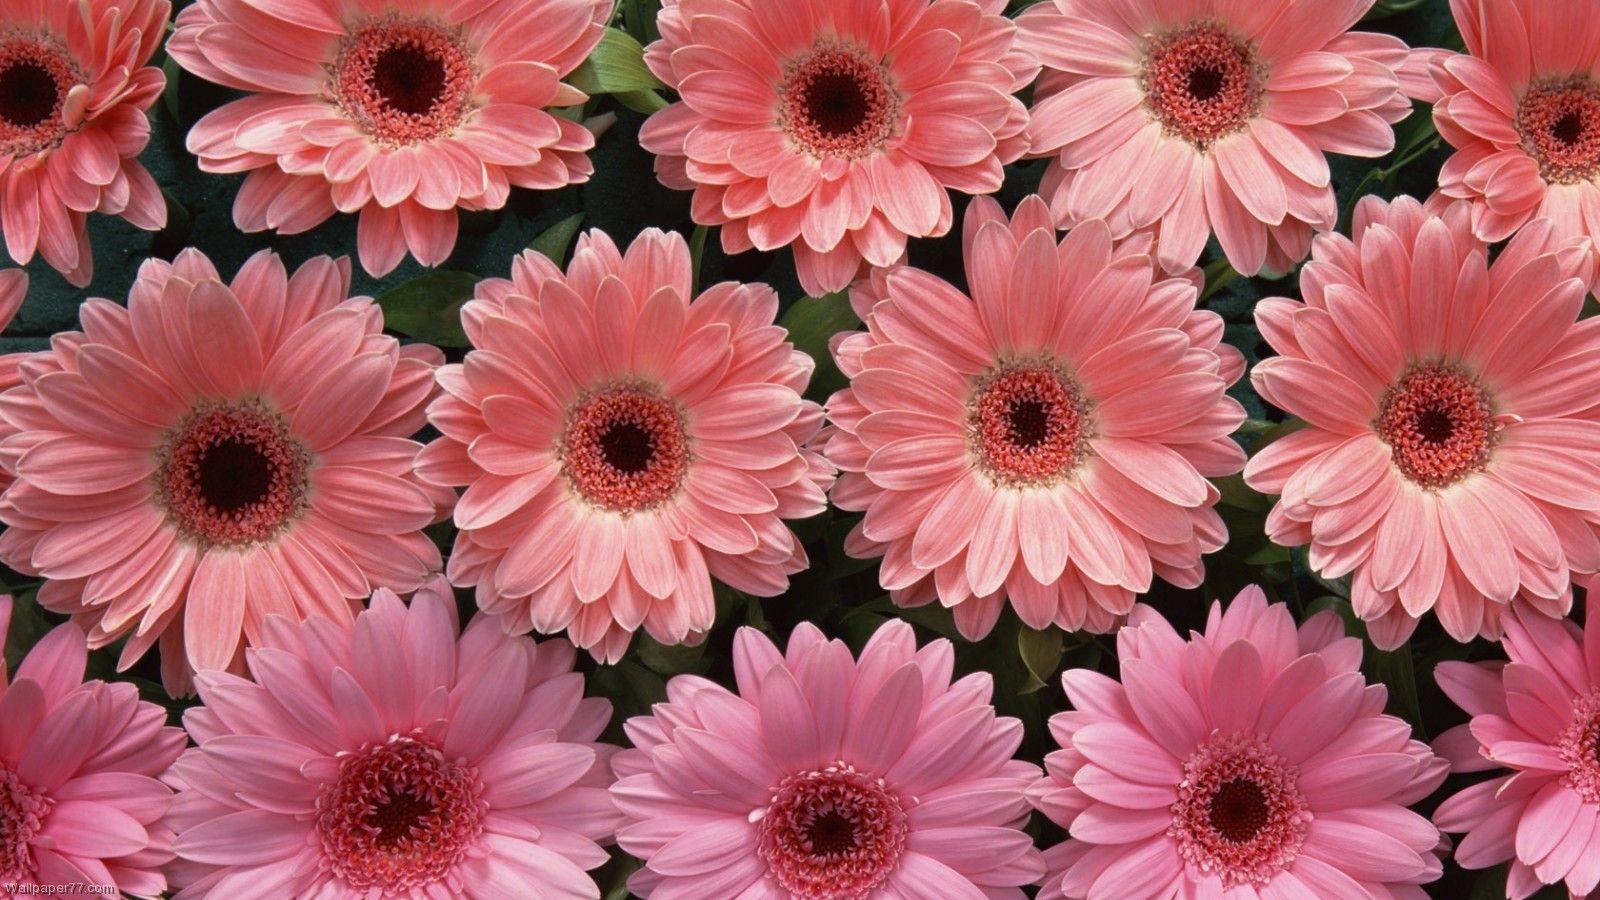 Pink Flower Bundle, 1600x900 pixels, Wallpaper tagged Bloom